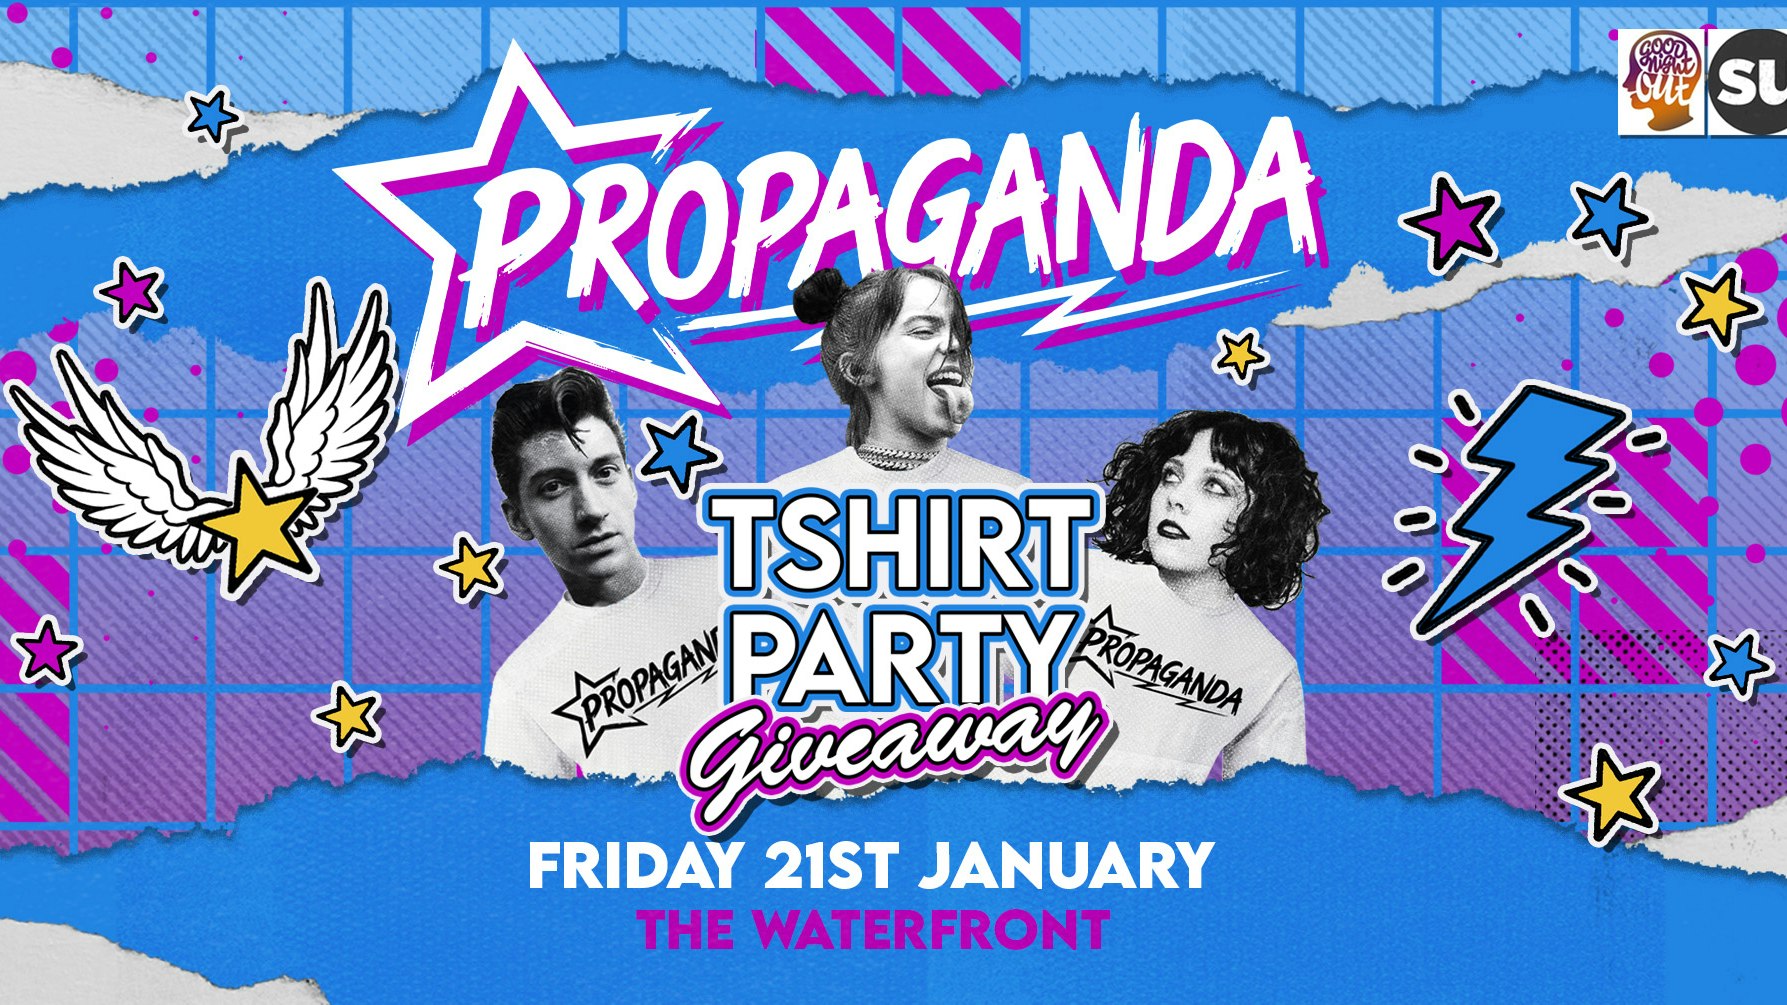 Propaganda Norwich – T-shirt Giveaway Party!